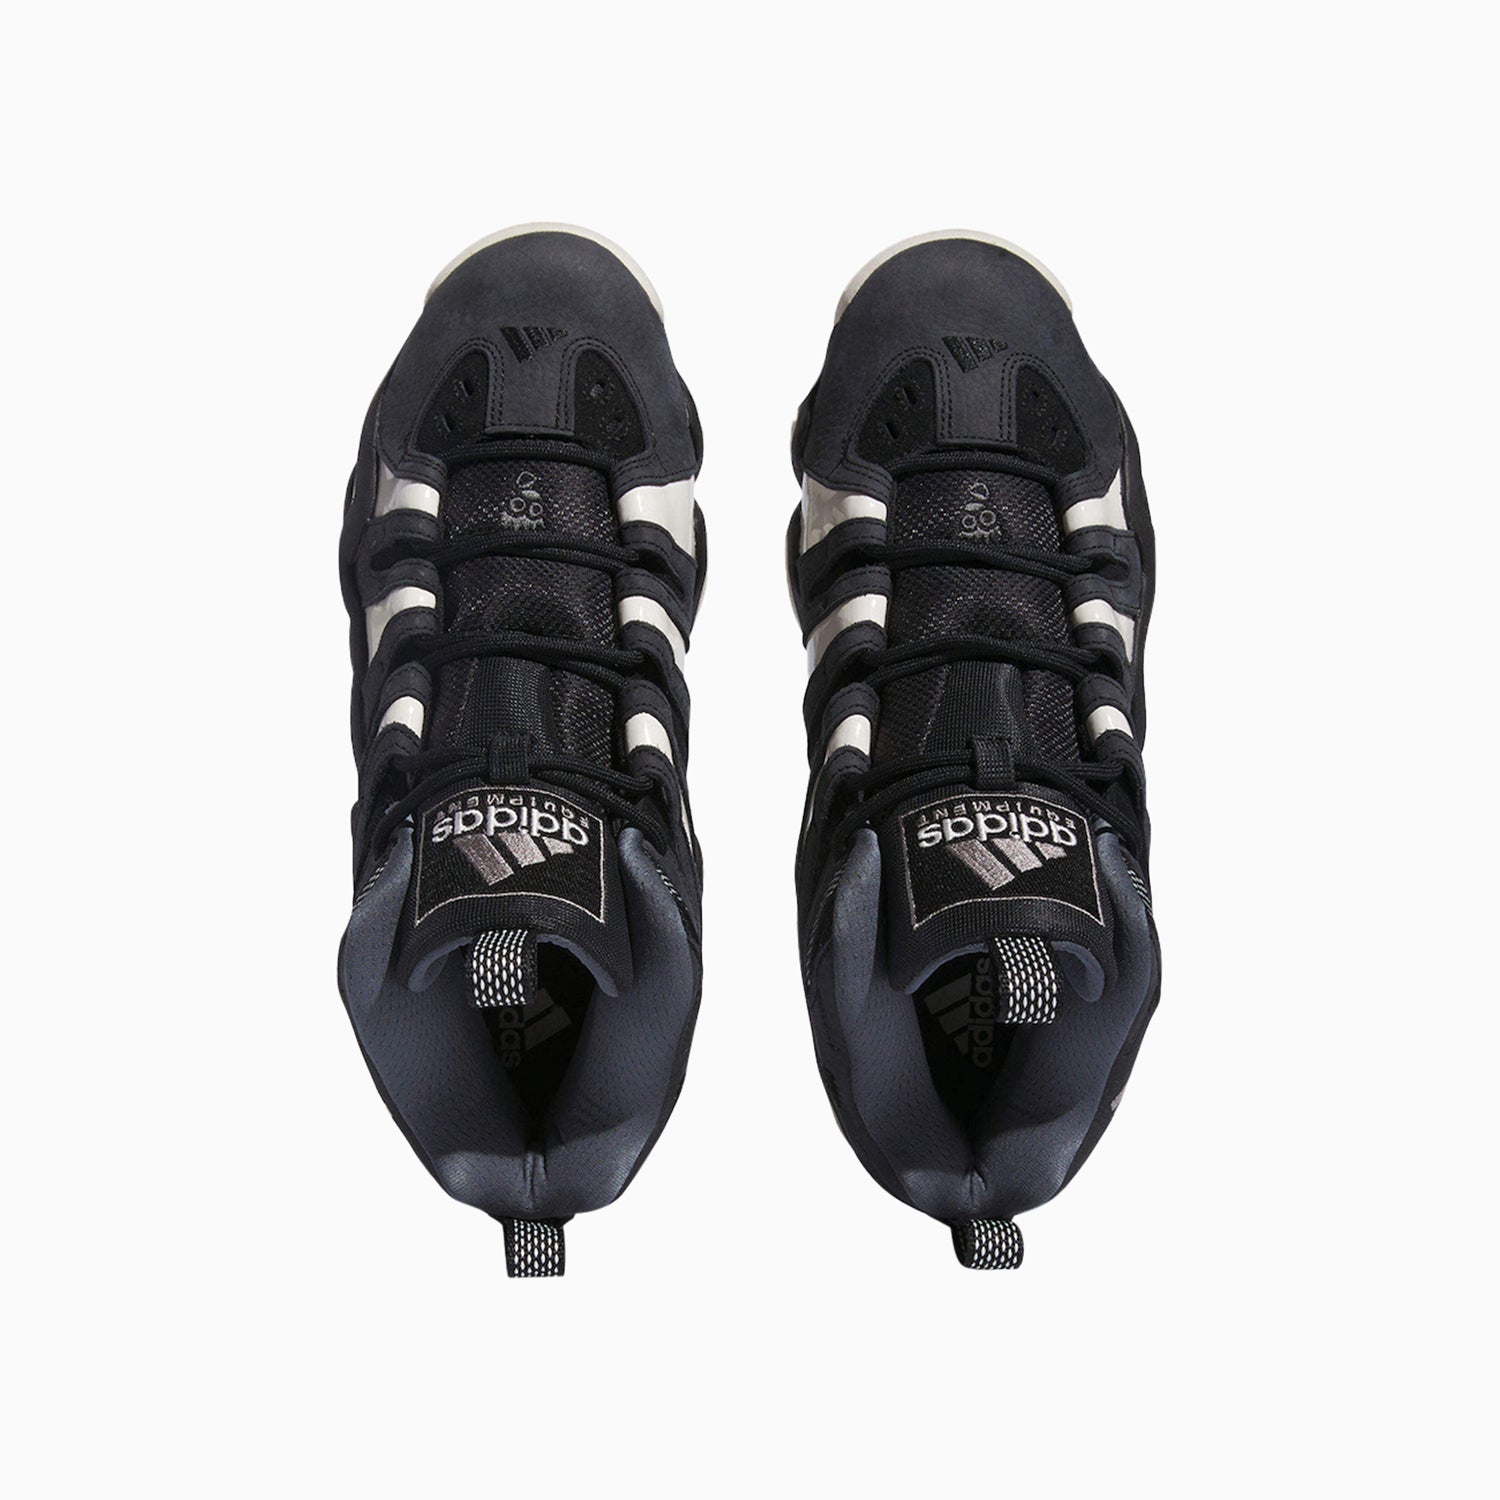 adidas-kobe-bryants-crazy-8-black-white-shoes-if2448